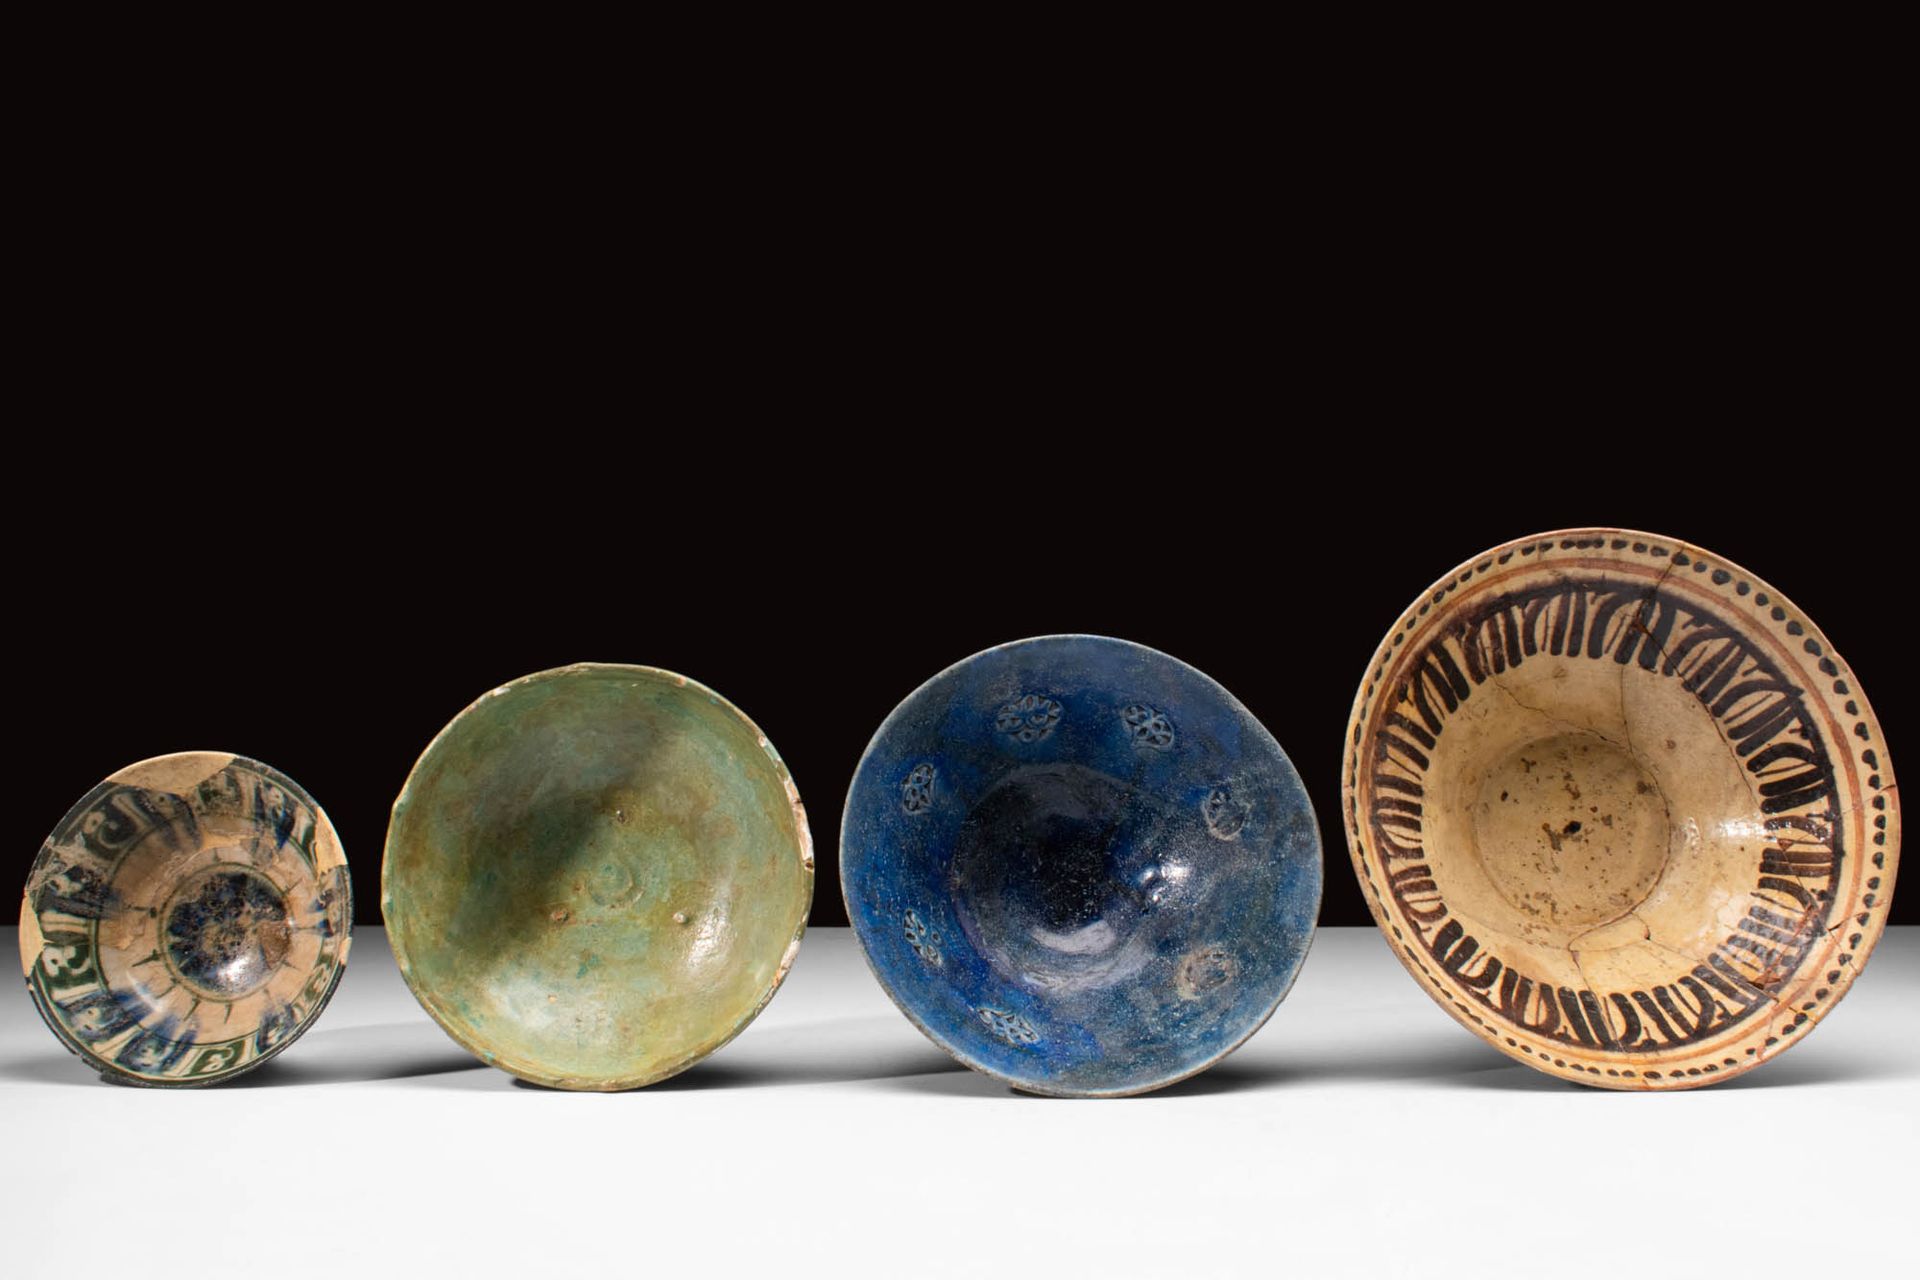 FOUR MEDIEVAL SELJUK GLAZED VESSELS Ca. 900 - 1300 D.C.
Colección de cuatro vasi&hellip;